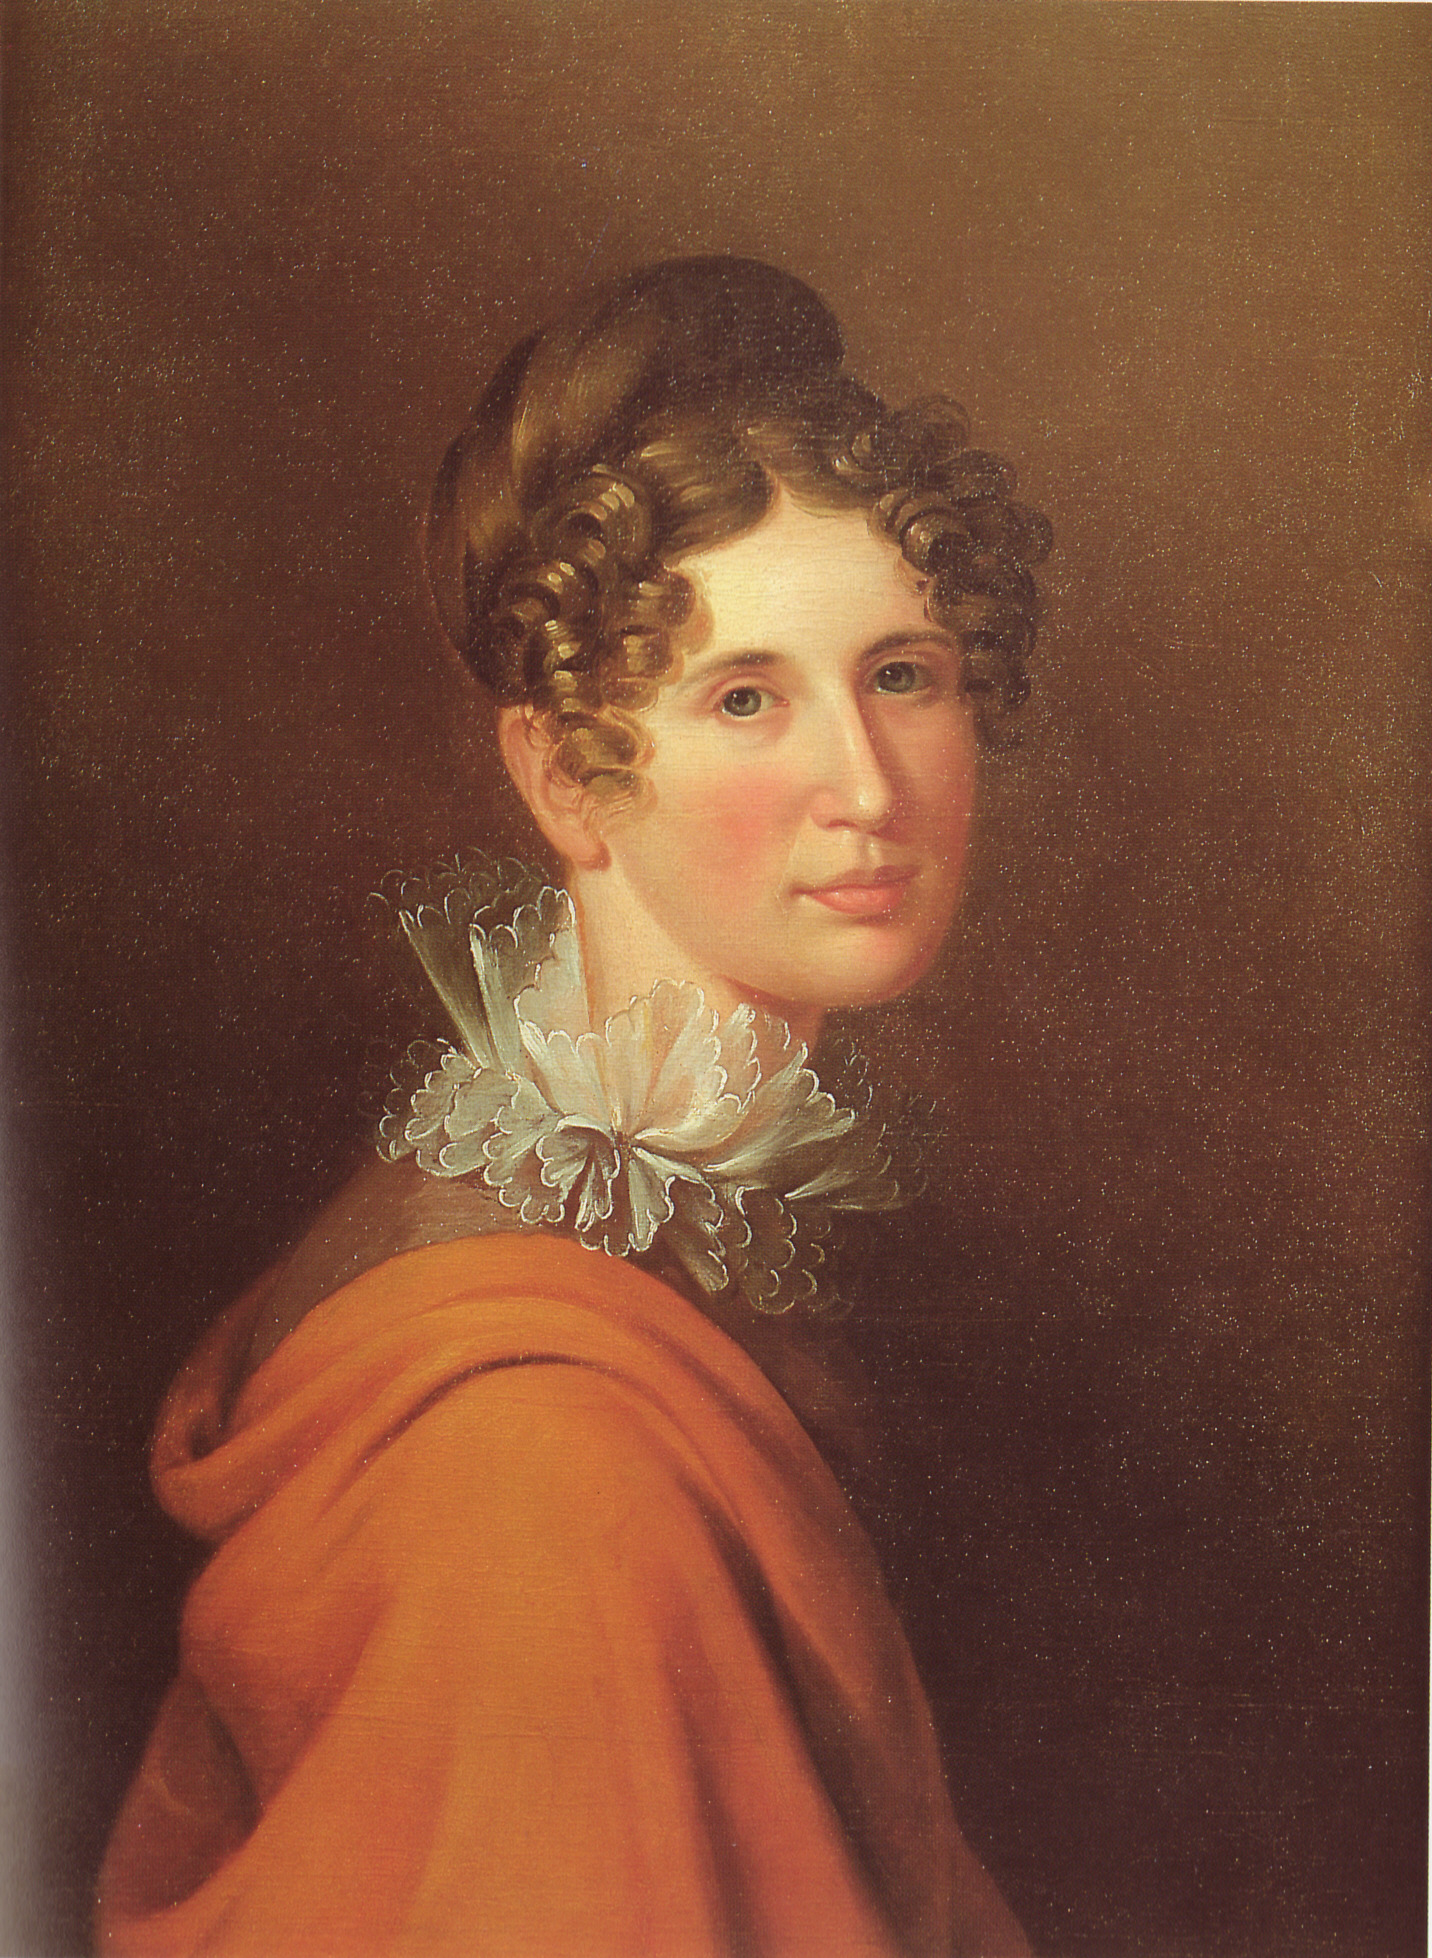 Margaretta Peale - October 1, 1795 - January 17, 1882